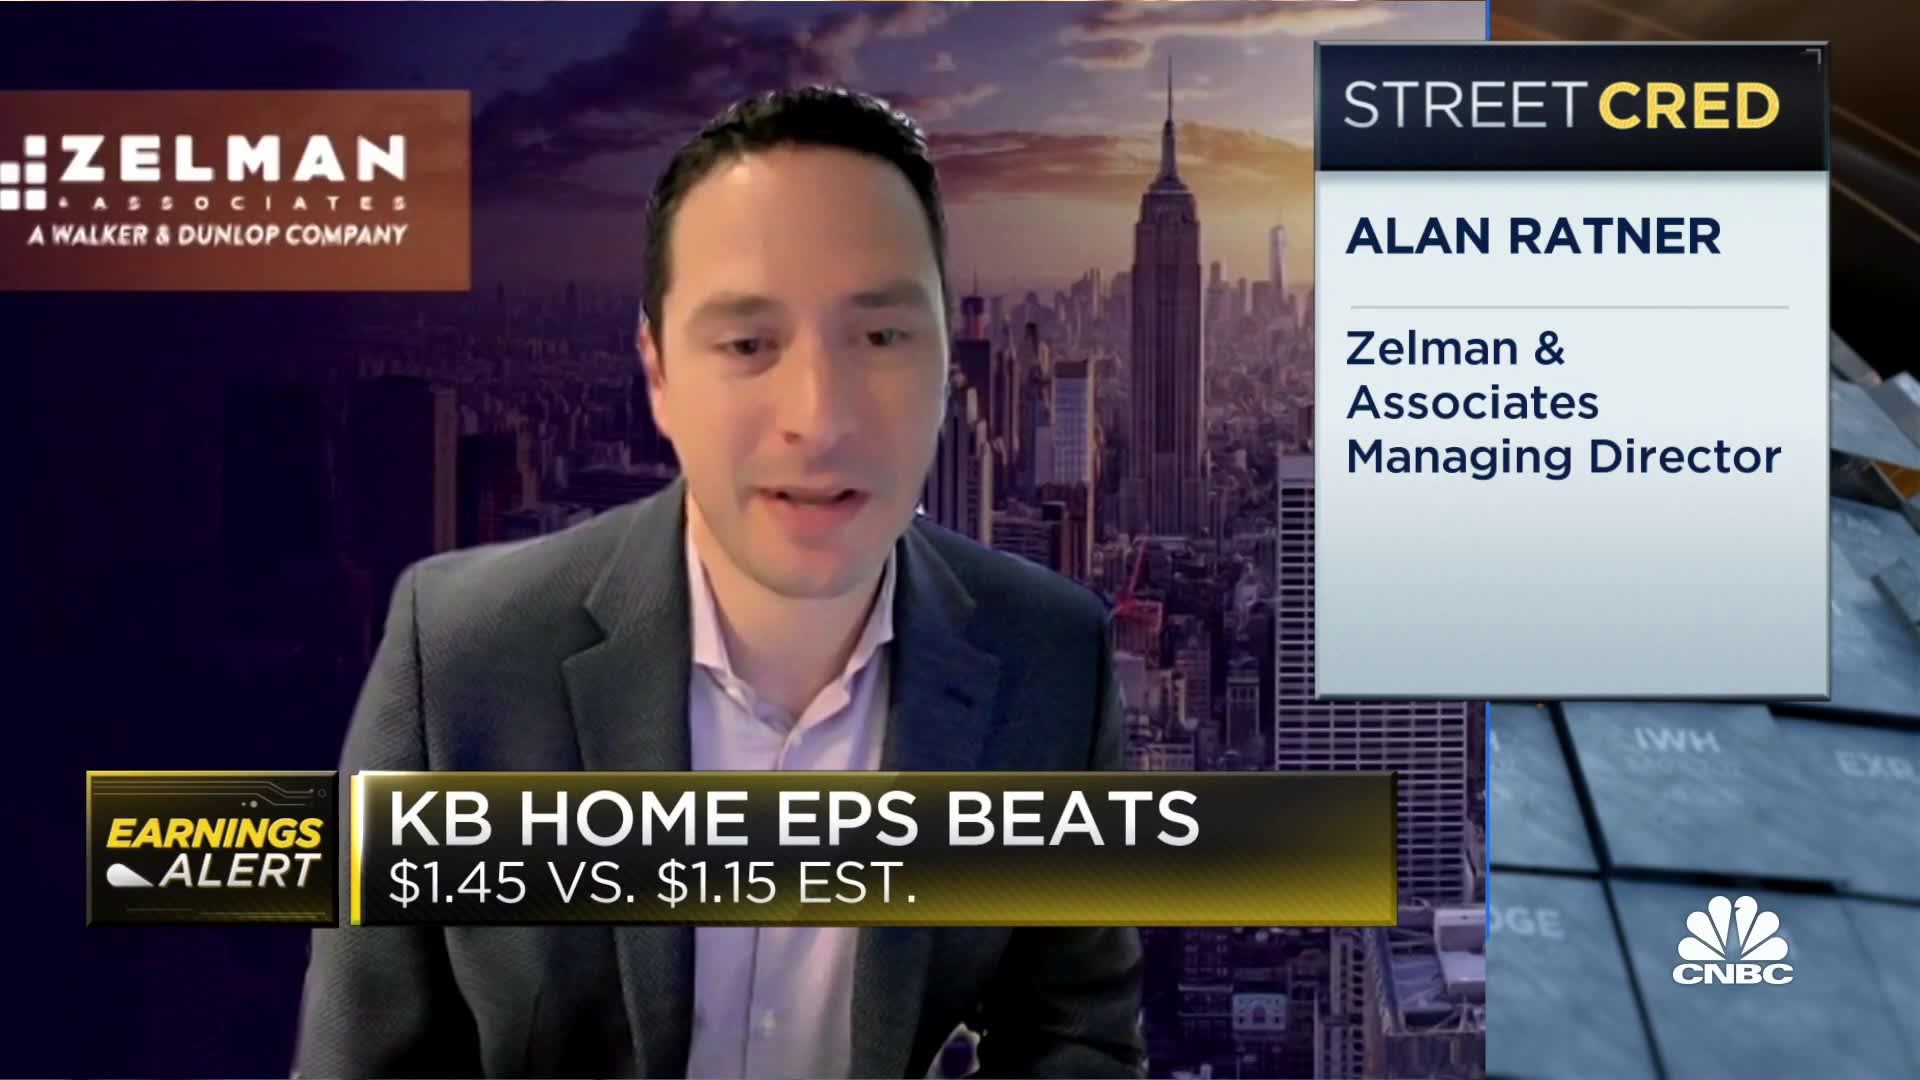 Zelman & Associates의 Alan Ratner는 주택 시장의 안정화 조짐을 확실히 보고 있다고 말했습니다.